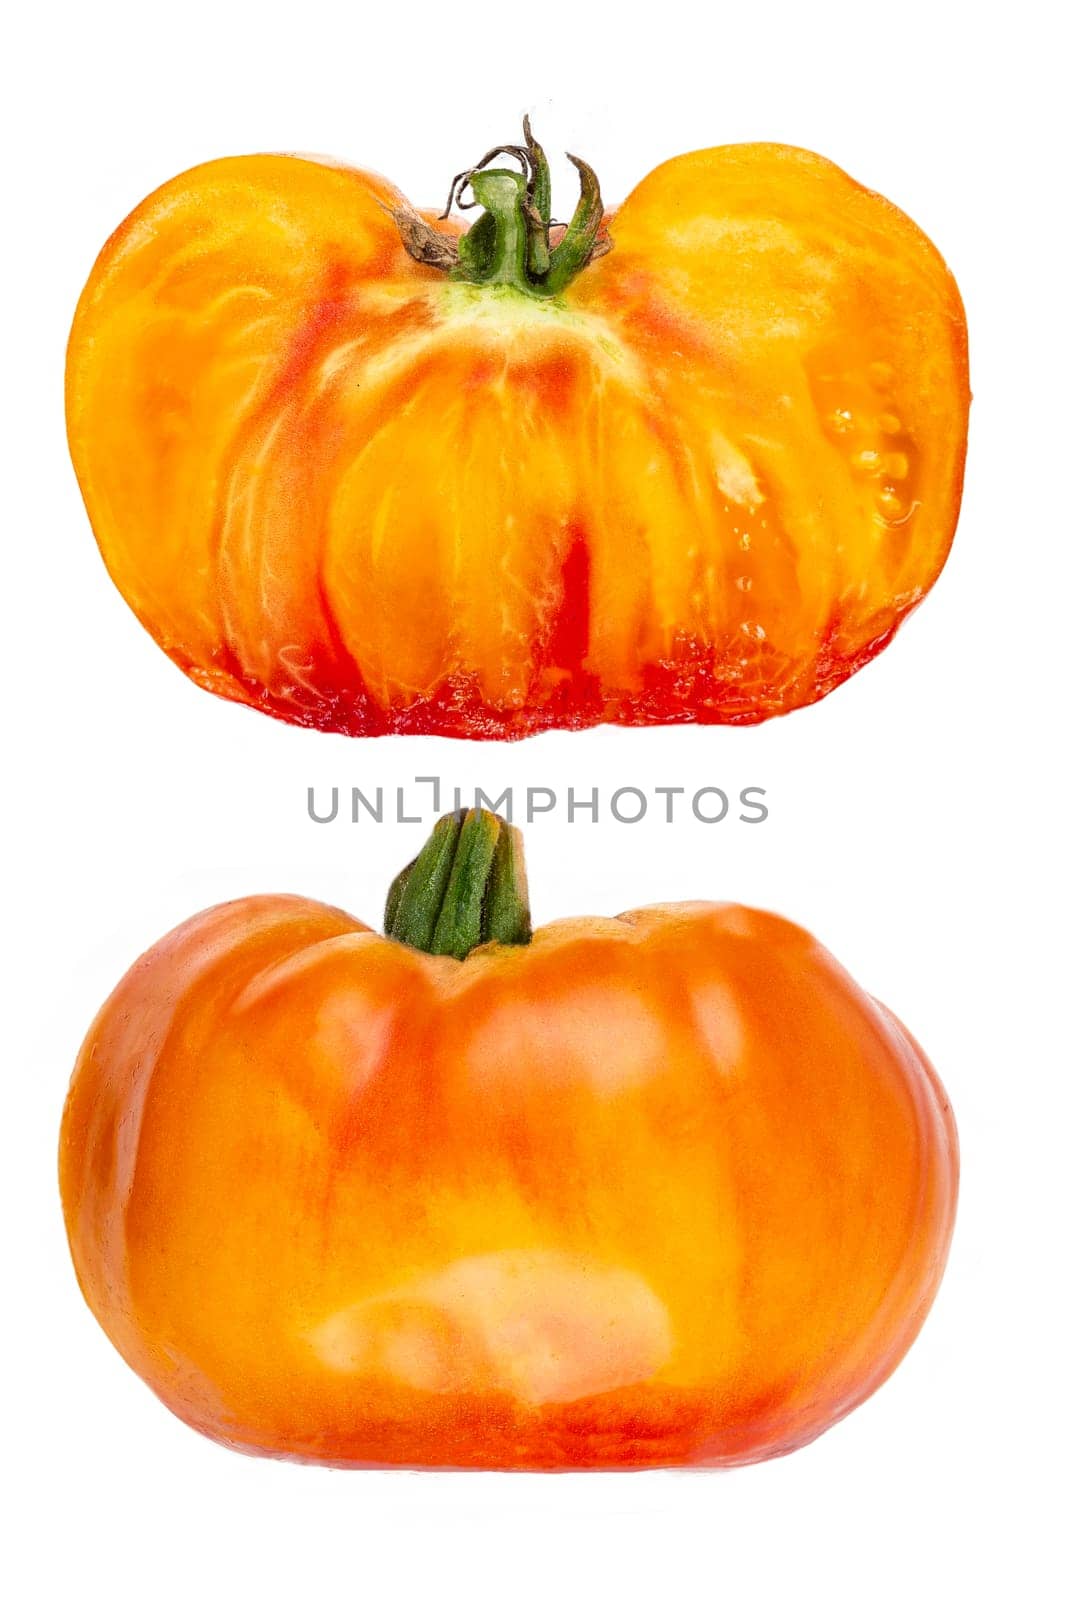 Studio shot of half yellow and orange tomatoes on white background